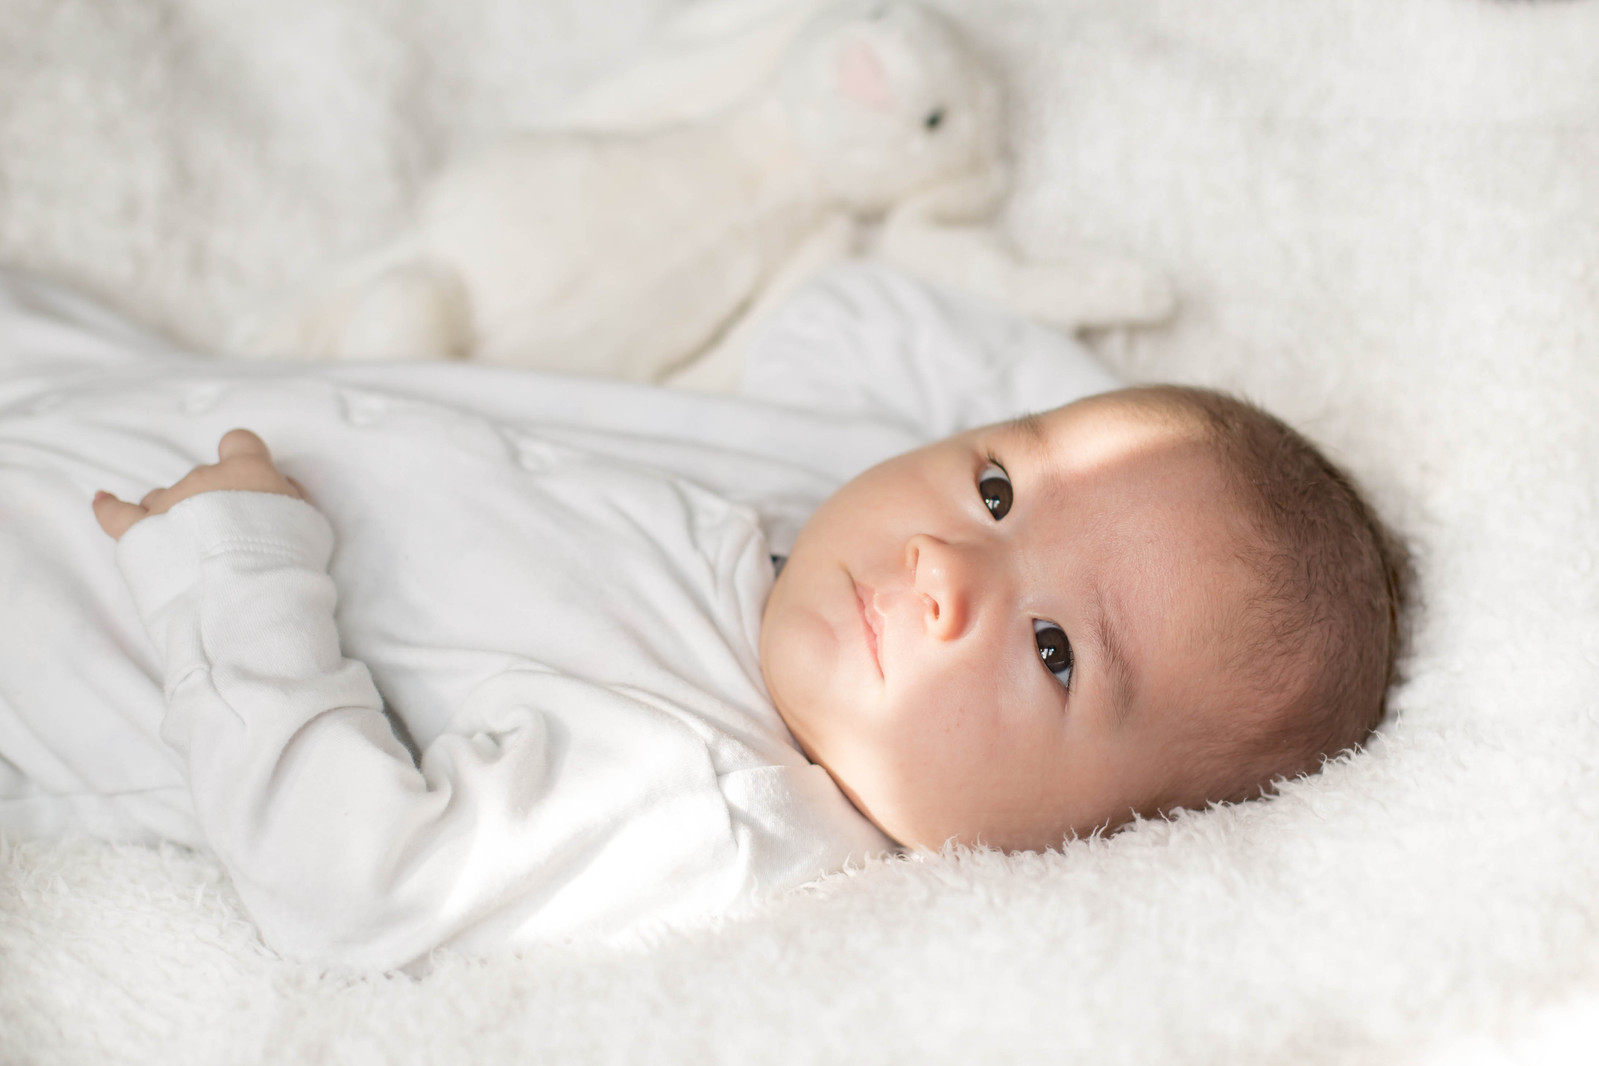 Newborn baby wearing white on a white background